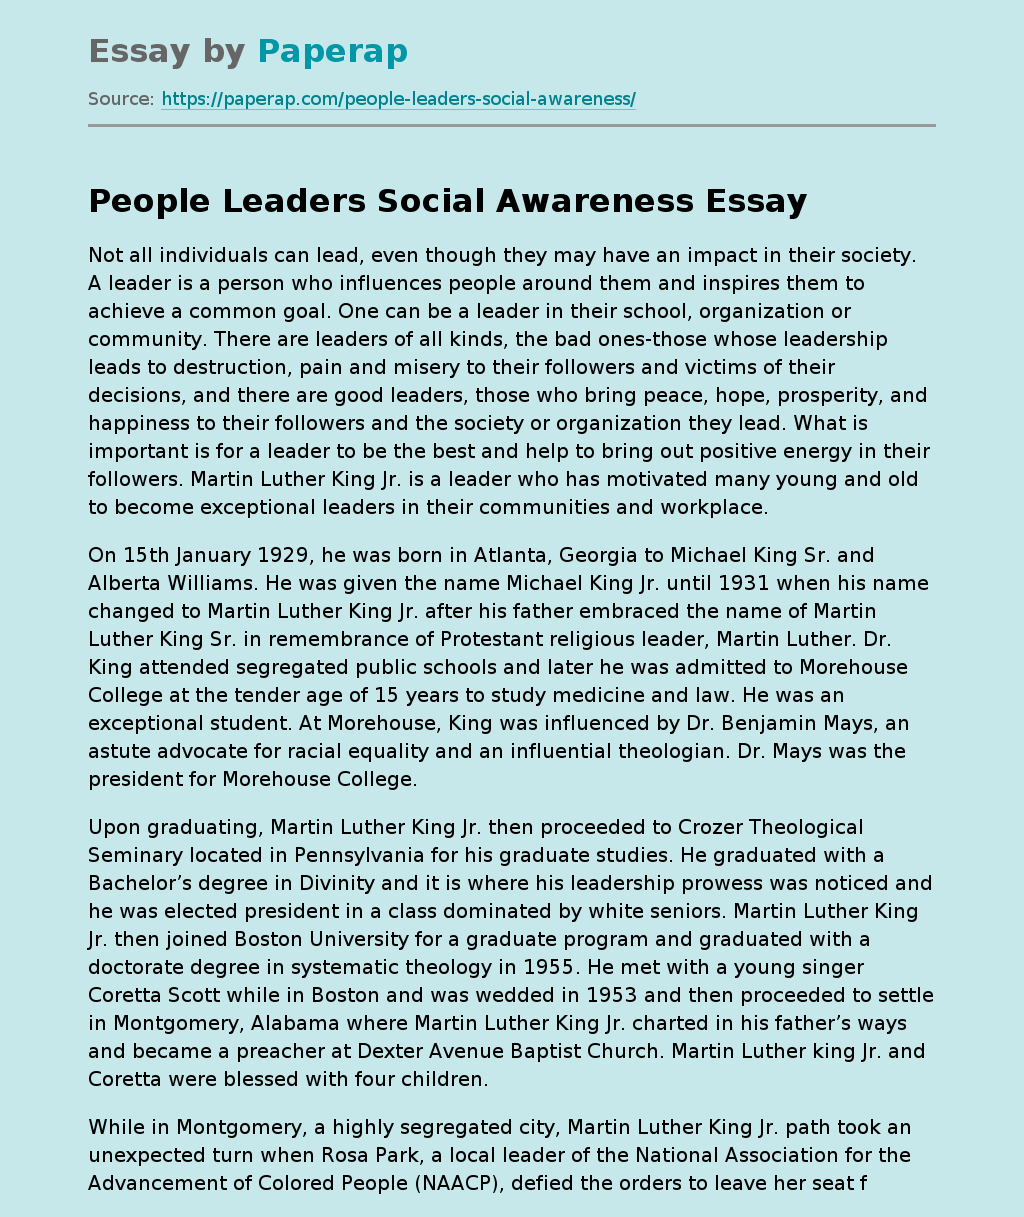 People Leaders Social Awareness